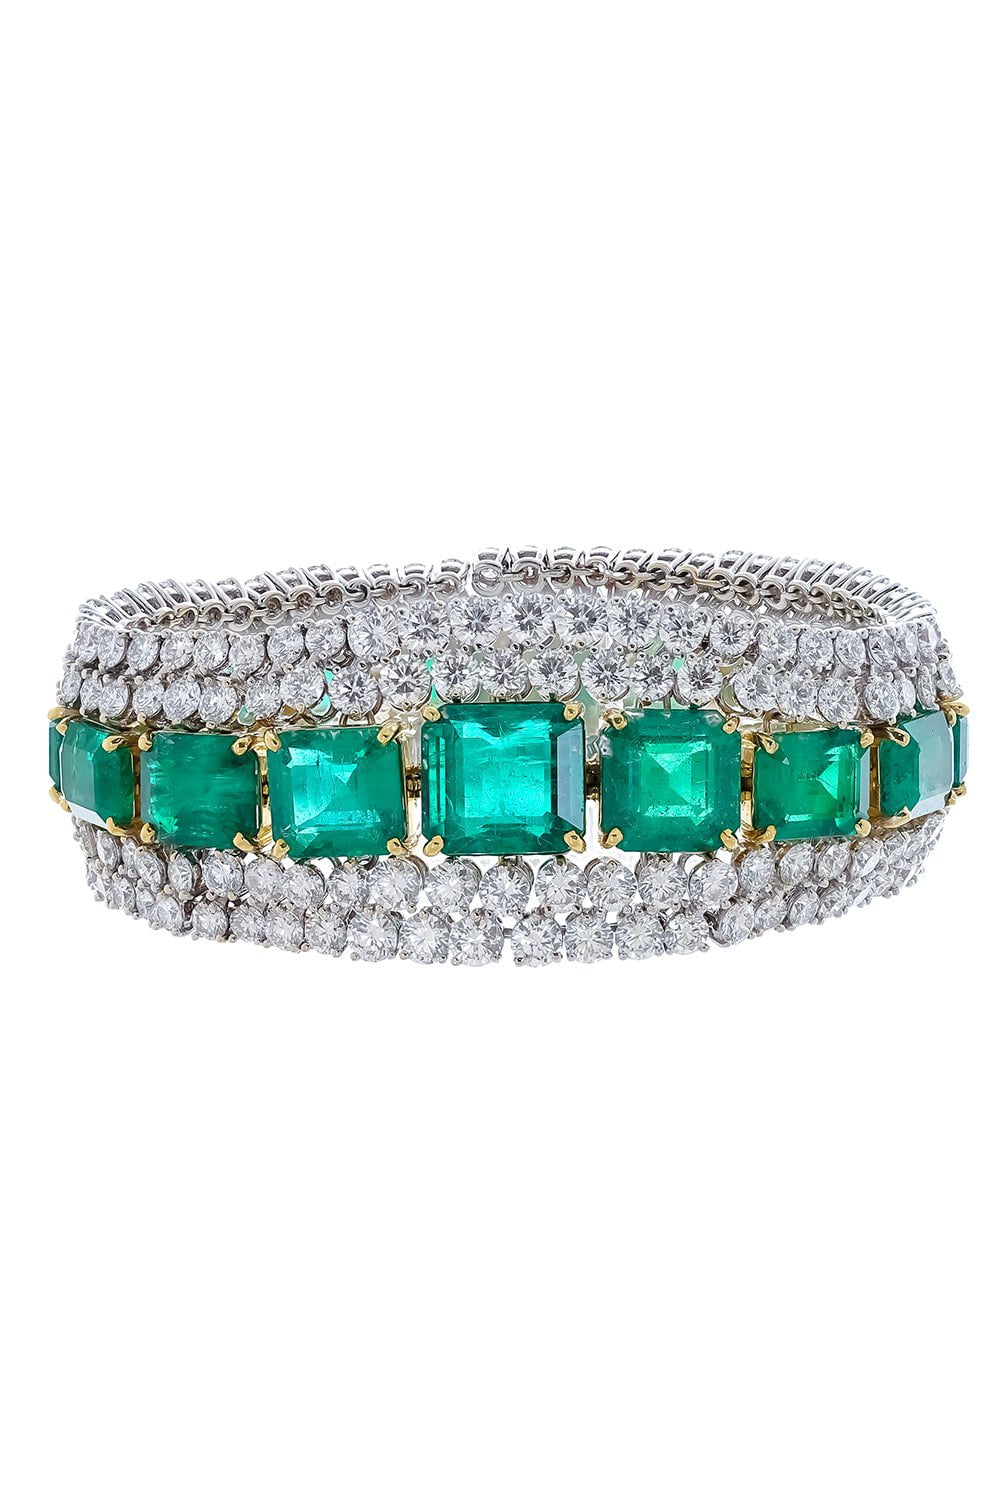 DIANA M. JEWELS-Emerald Diamond Bracelet-PLATINUM